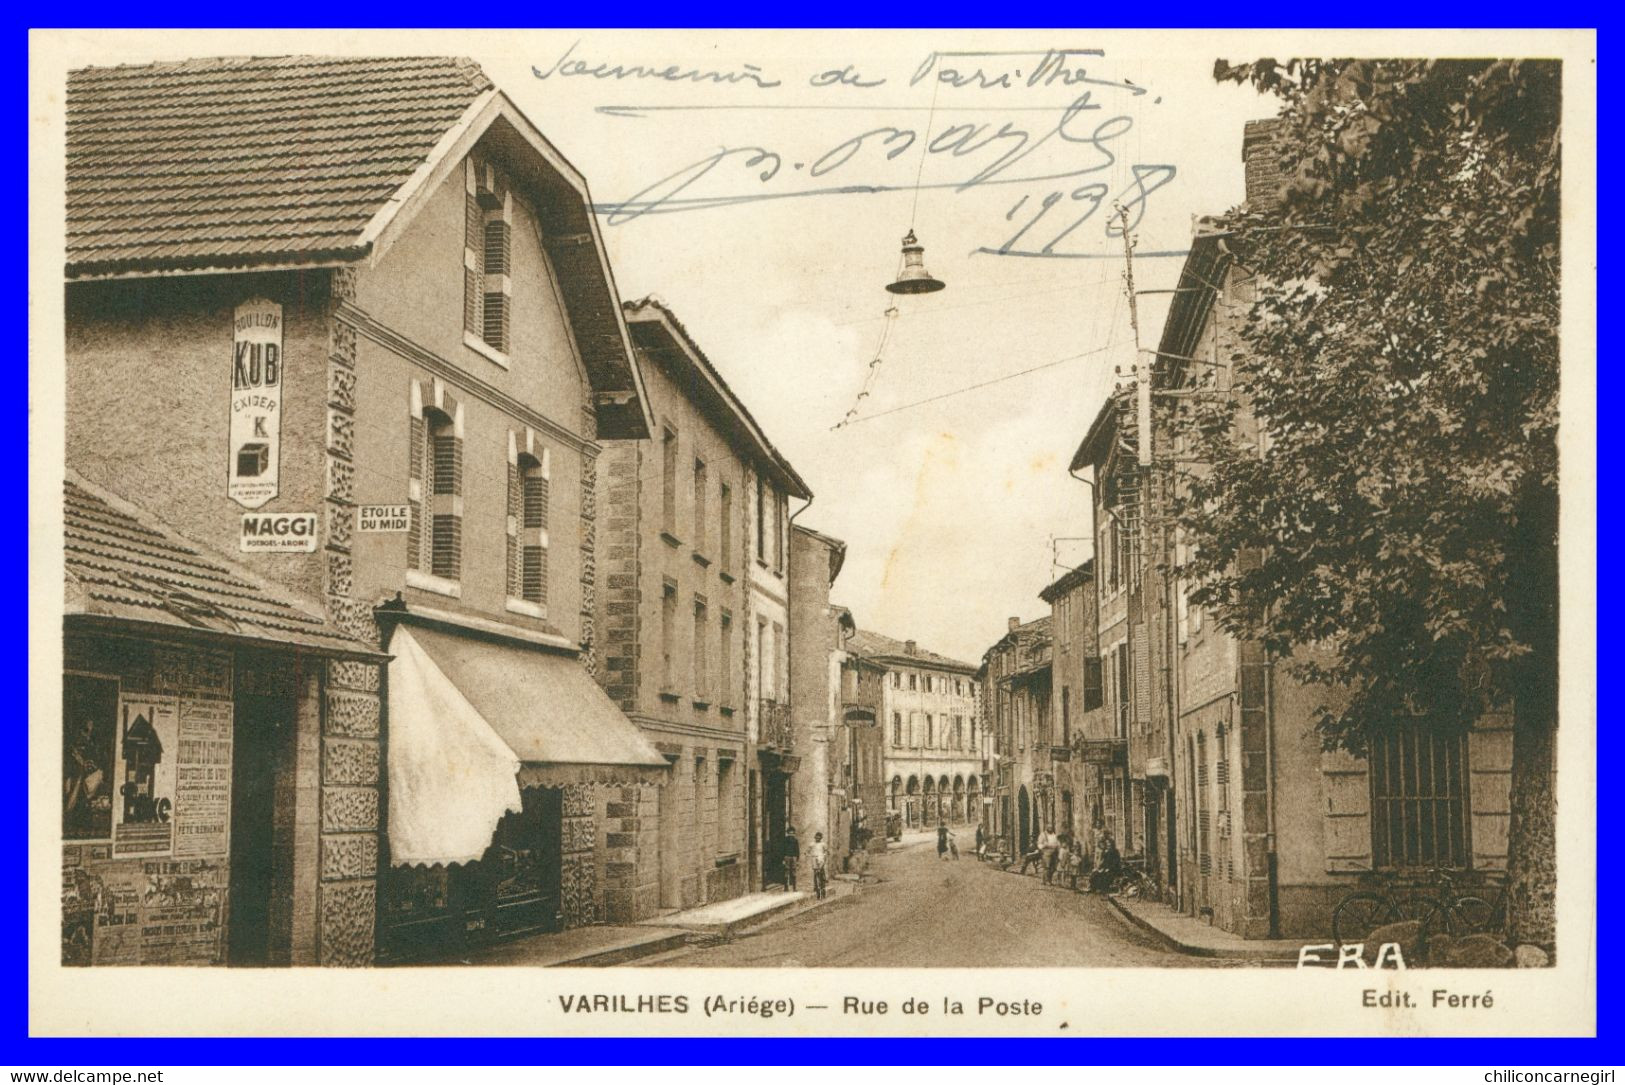 VARILHES - Rue De La Poste - Etoile Du Midi - KUB MAGGI - Animée - Edit. FERRE - Phototypie ERA - 1928 - Varilhes